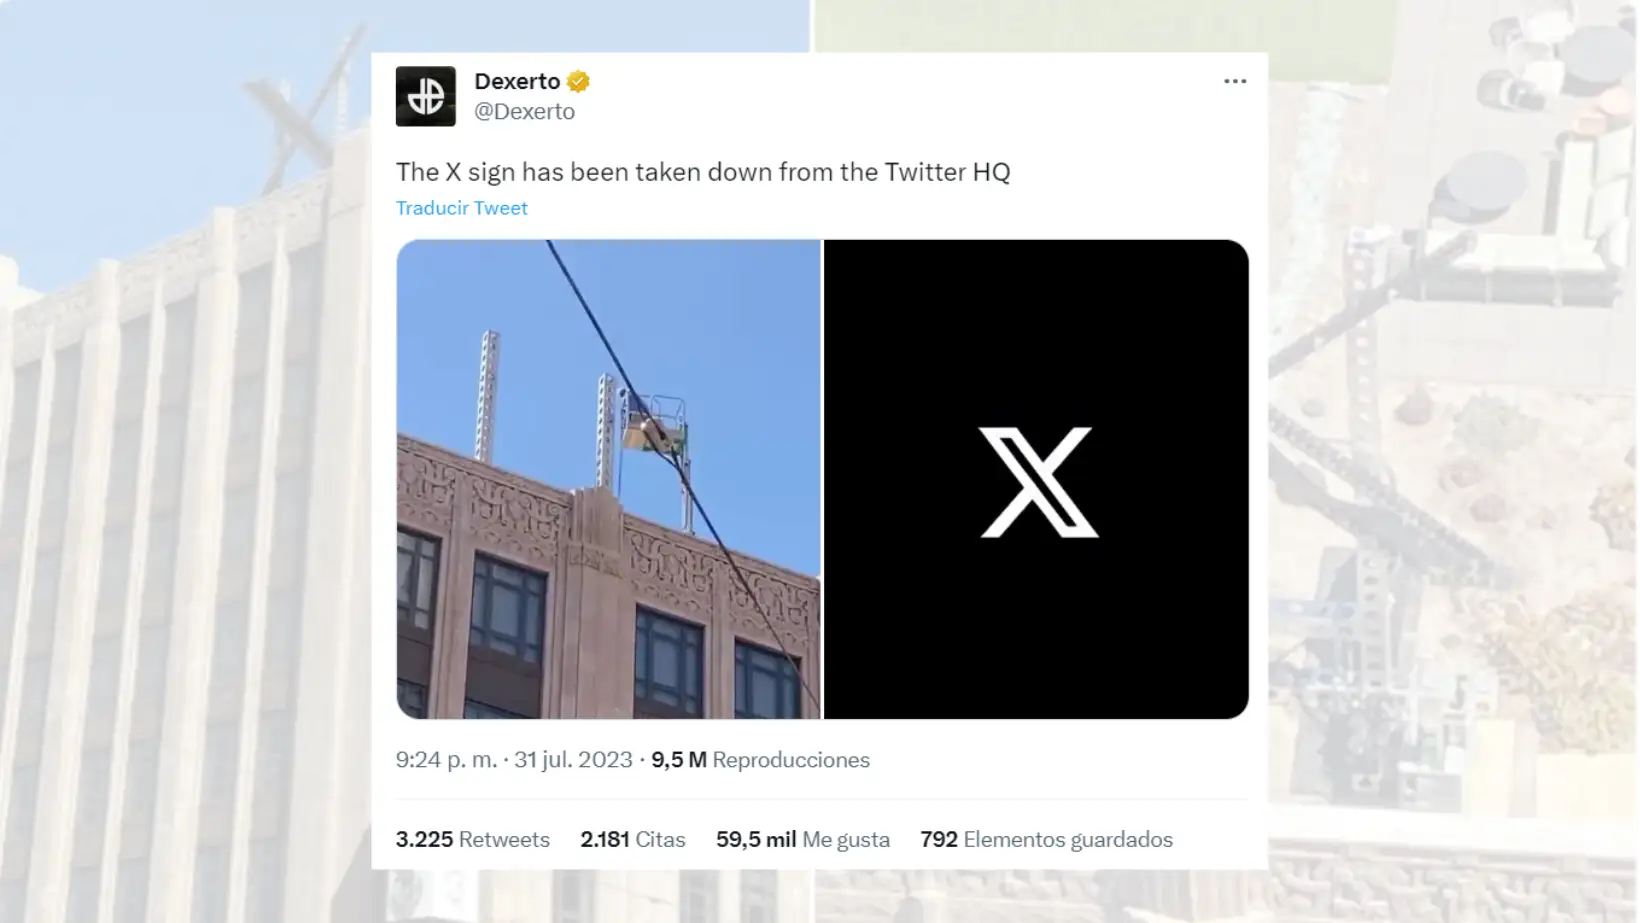 Tuit informativo sobre la retirada del cartel de la X de la sede de Twitter.